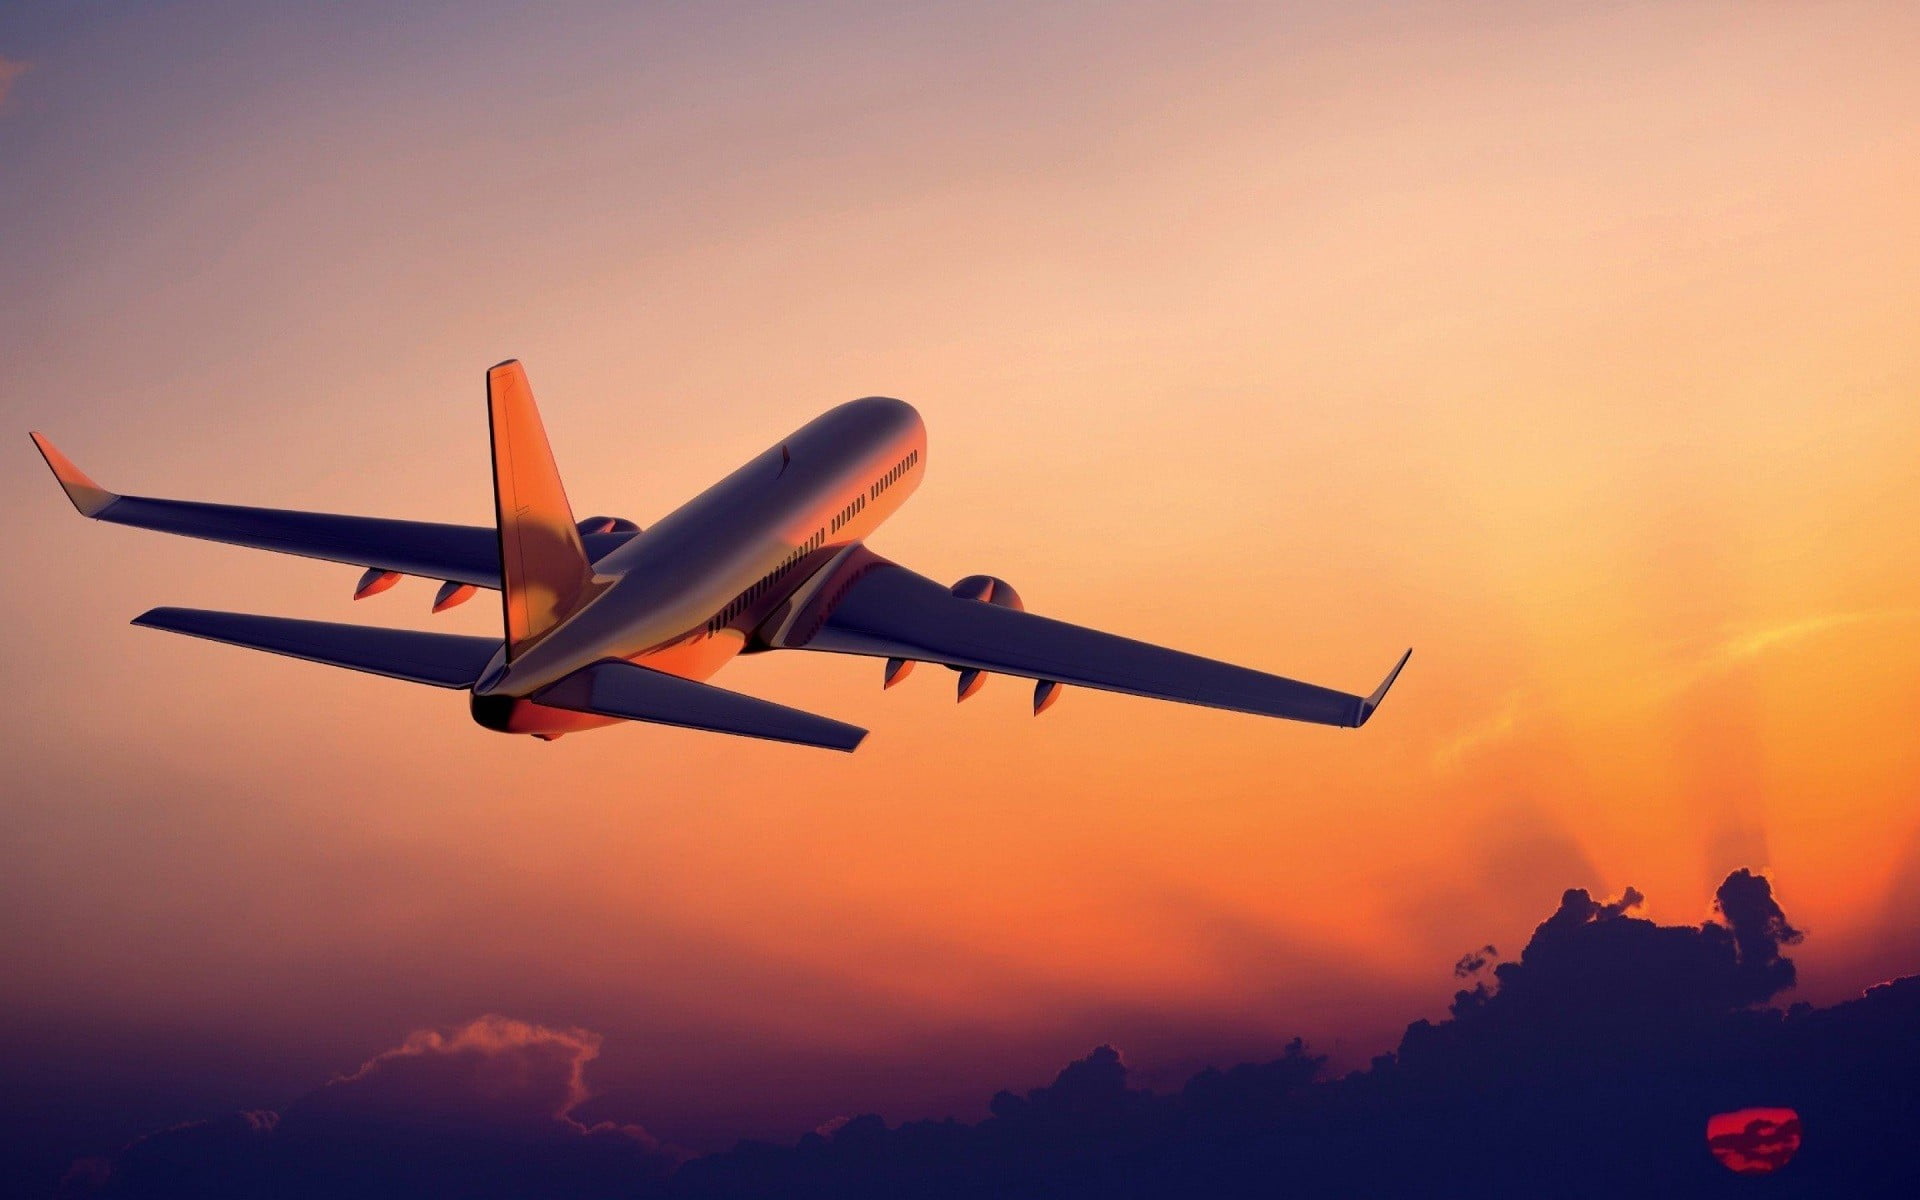 passenger airplane on air during sunset, aircraft, passenger aircraft, airplane, sunset